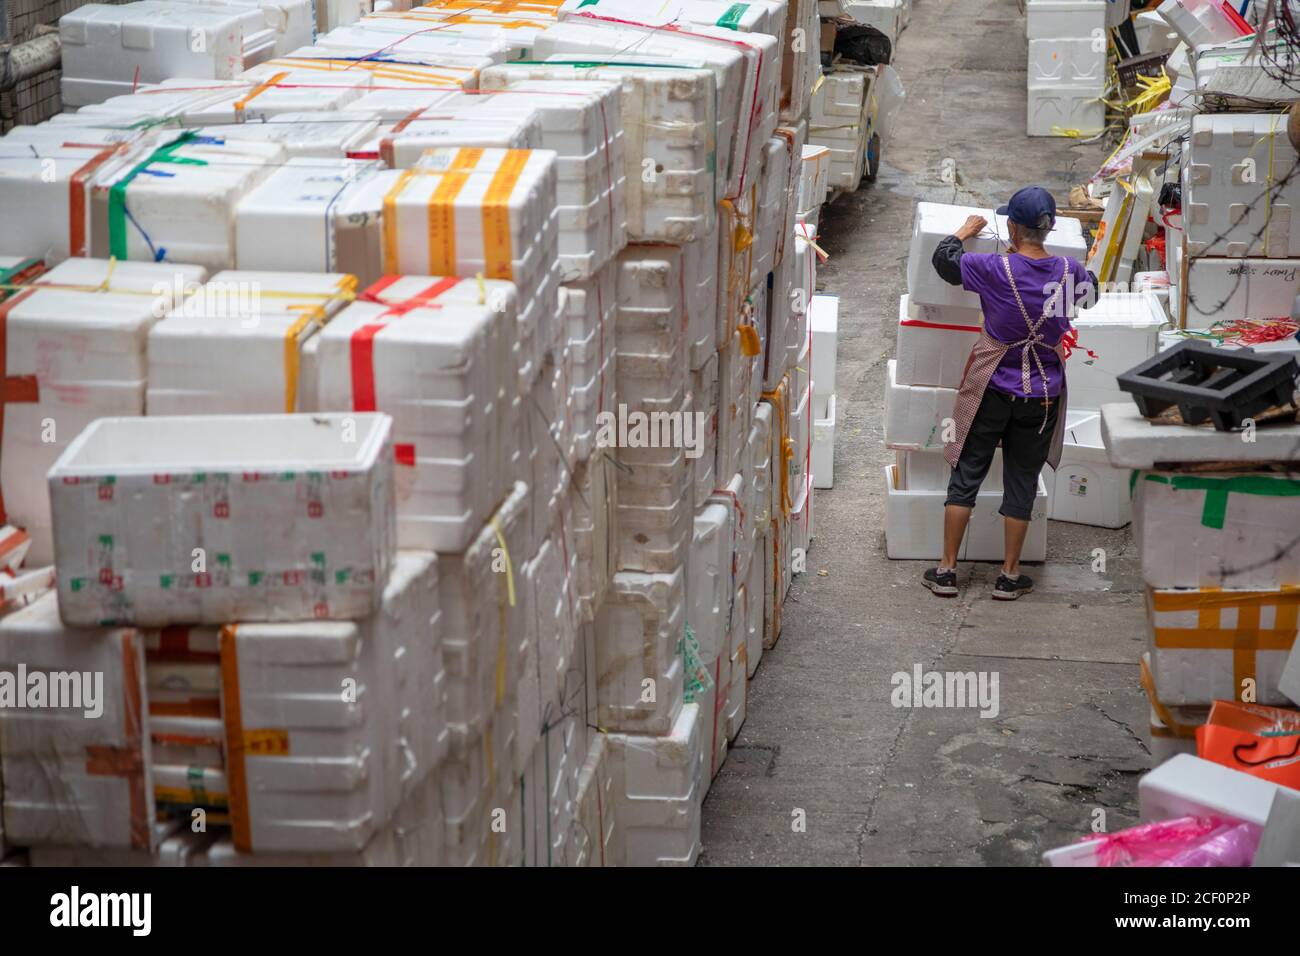 Woman collecting boxes, Sai Ying Pun, Hong Kong Island, Hong Kong Stock Photo